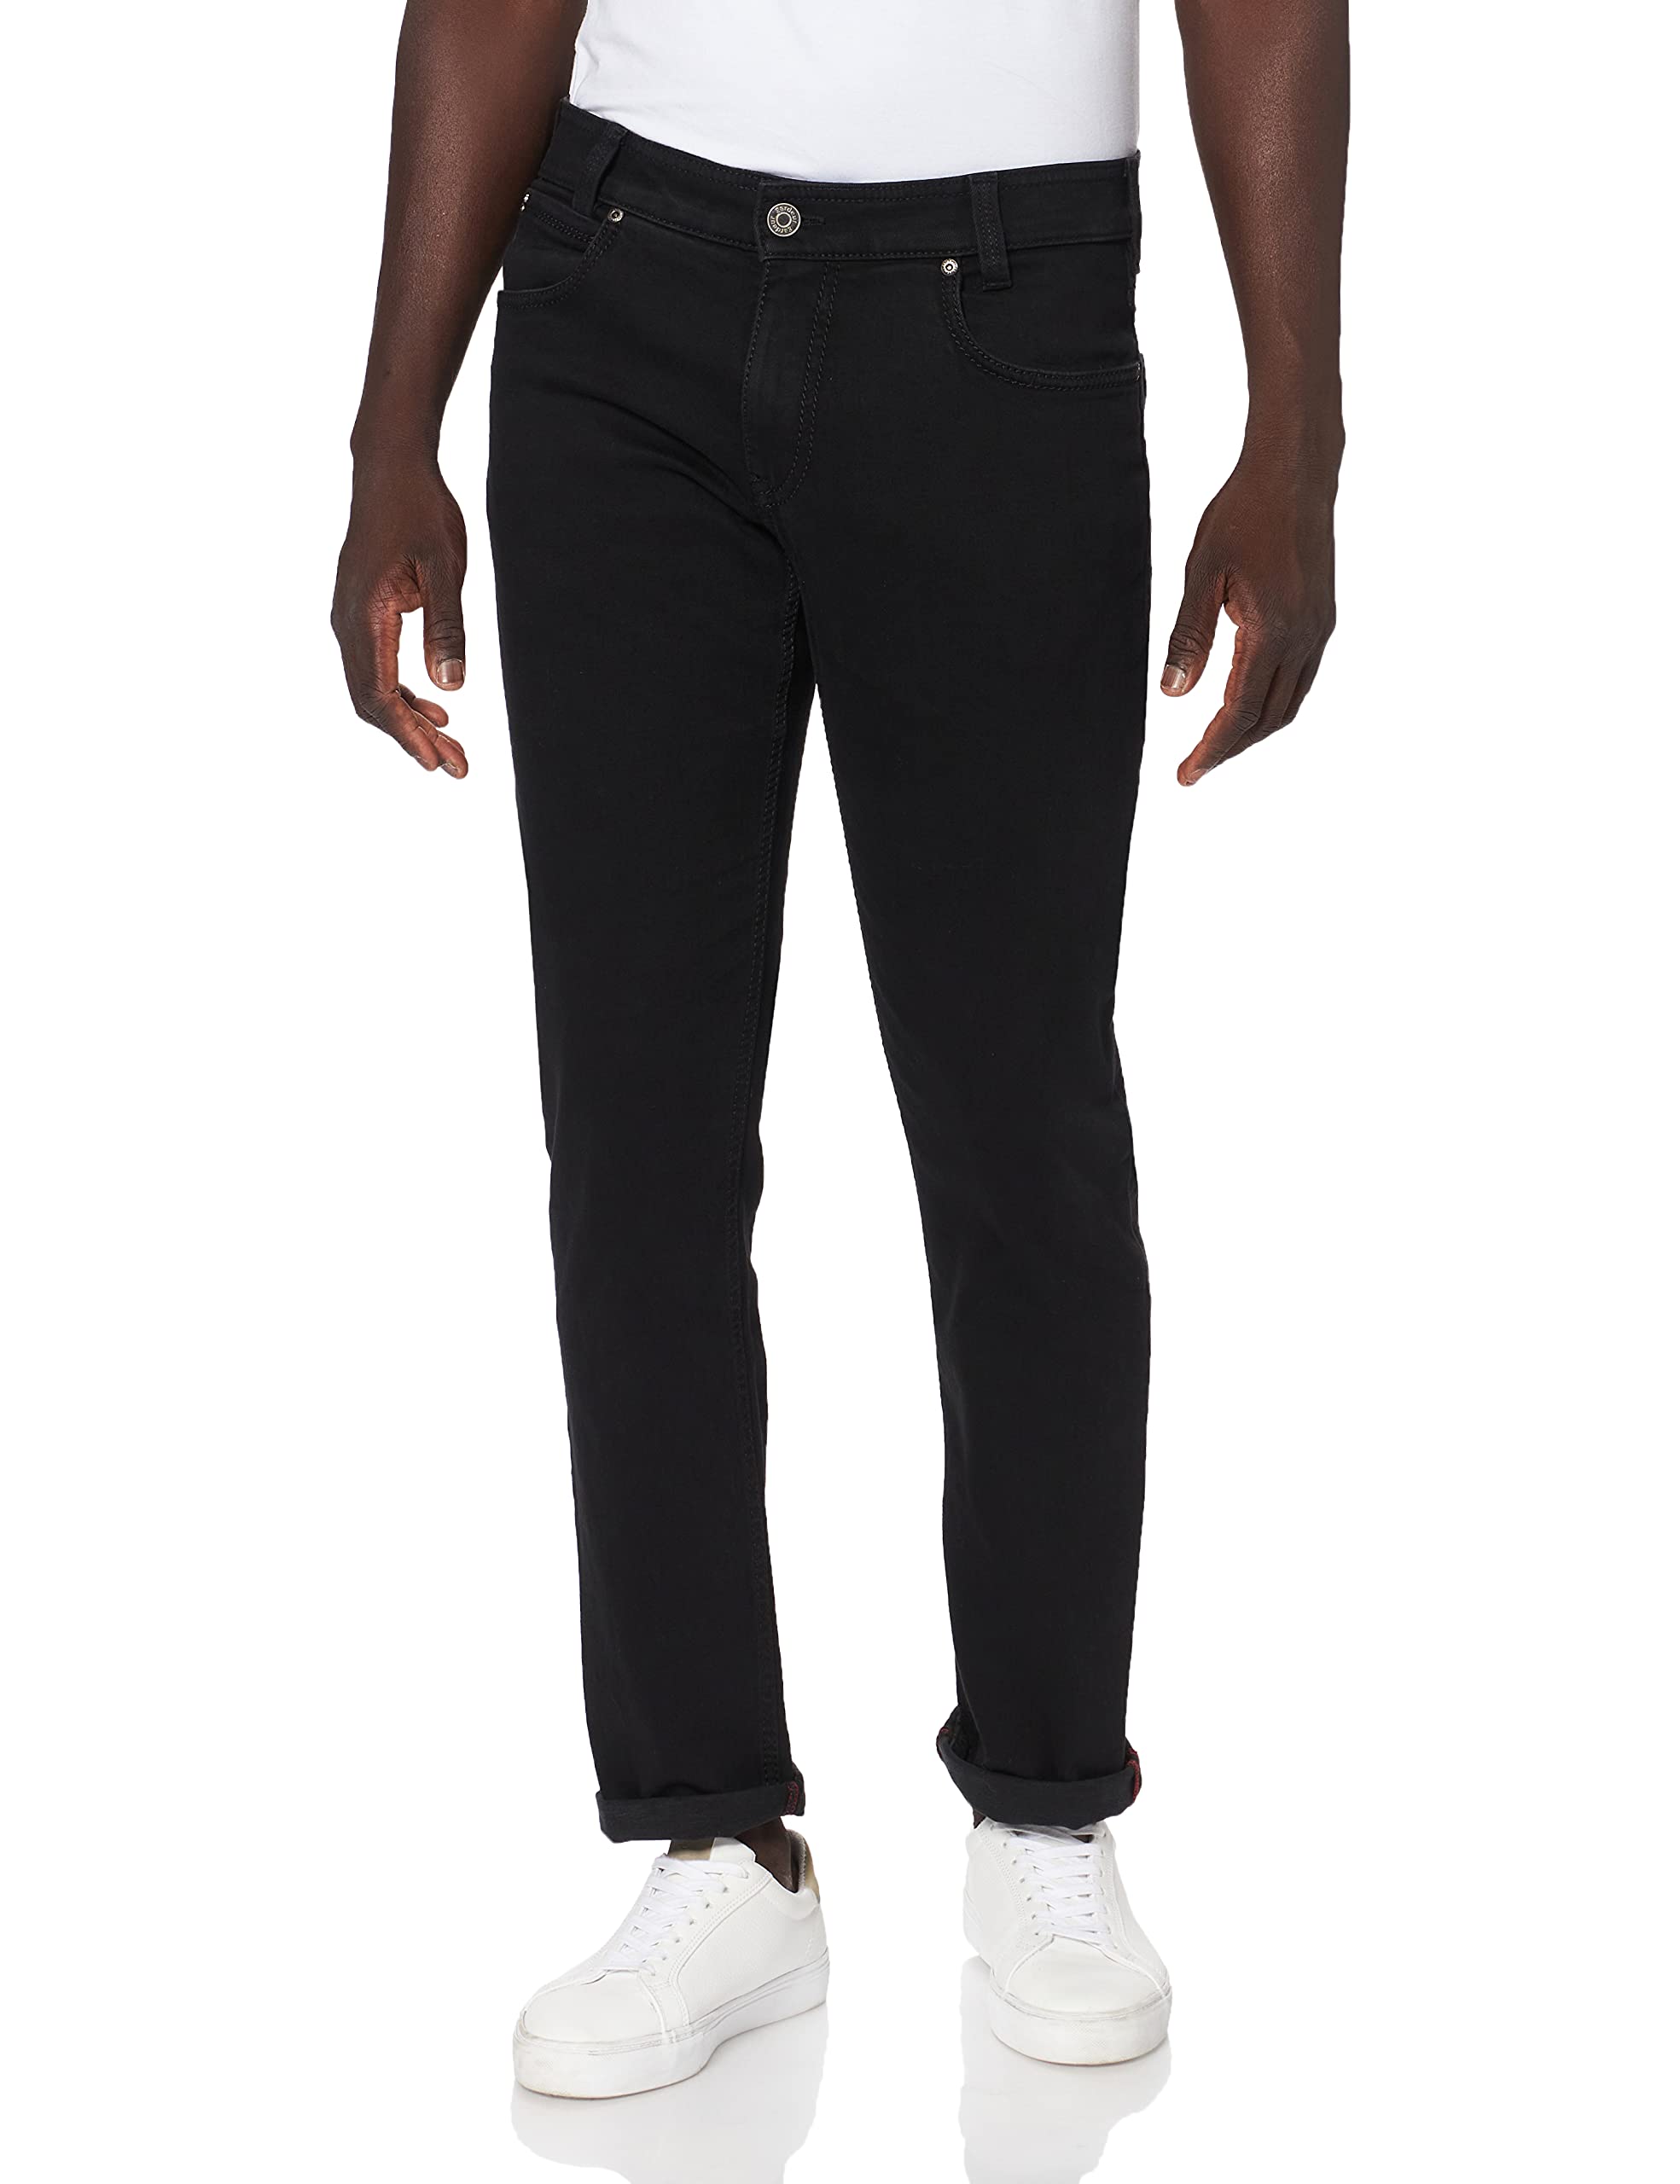 Atelier GARDEUR Herren Batu Comfort Stretch Jeans, Black/Black 799, 38W / 36L